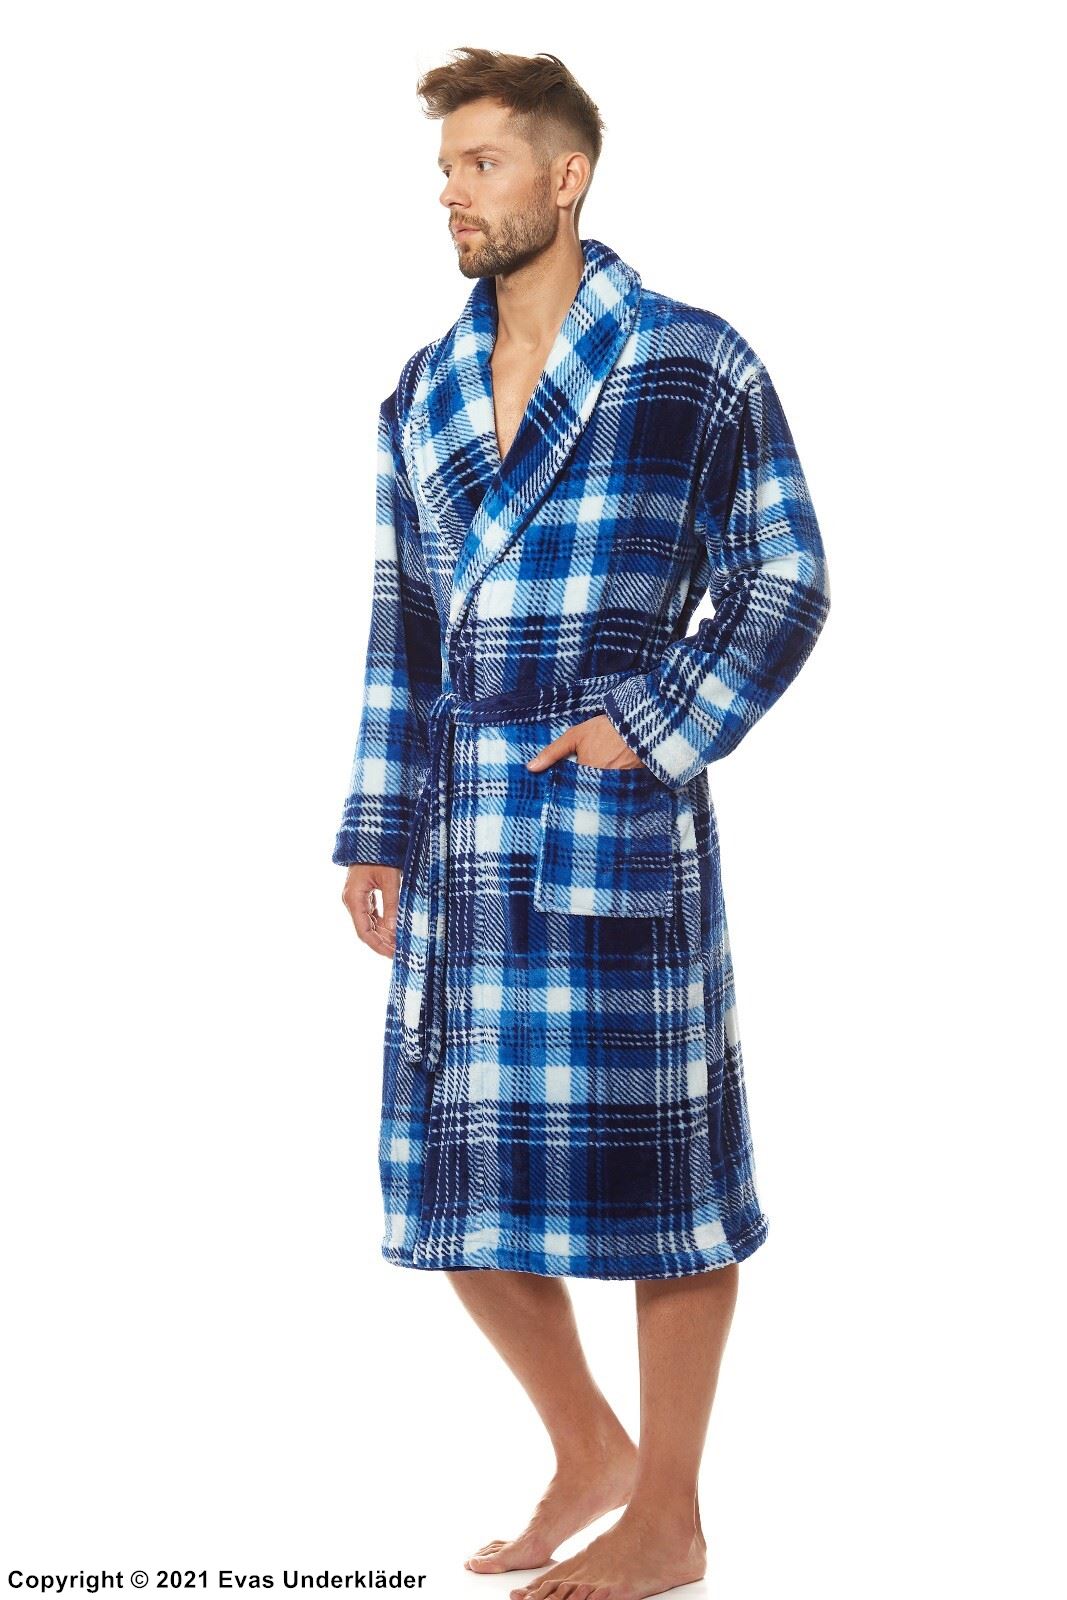 Men's bathrobe, long sleeves, pockets, checkered pattern